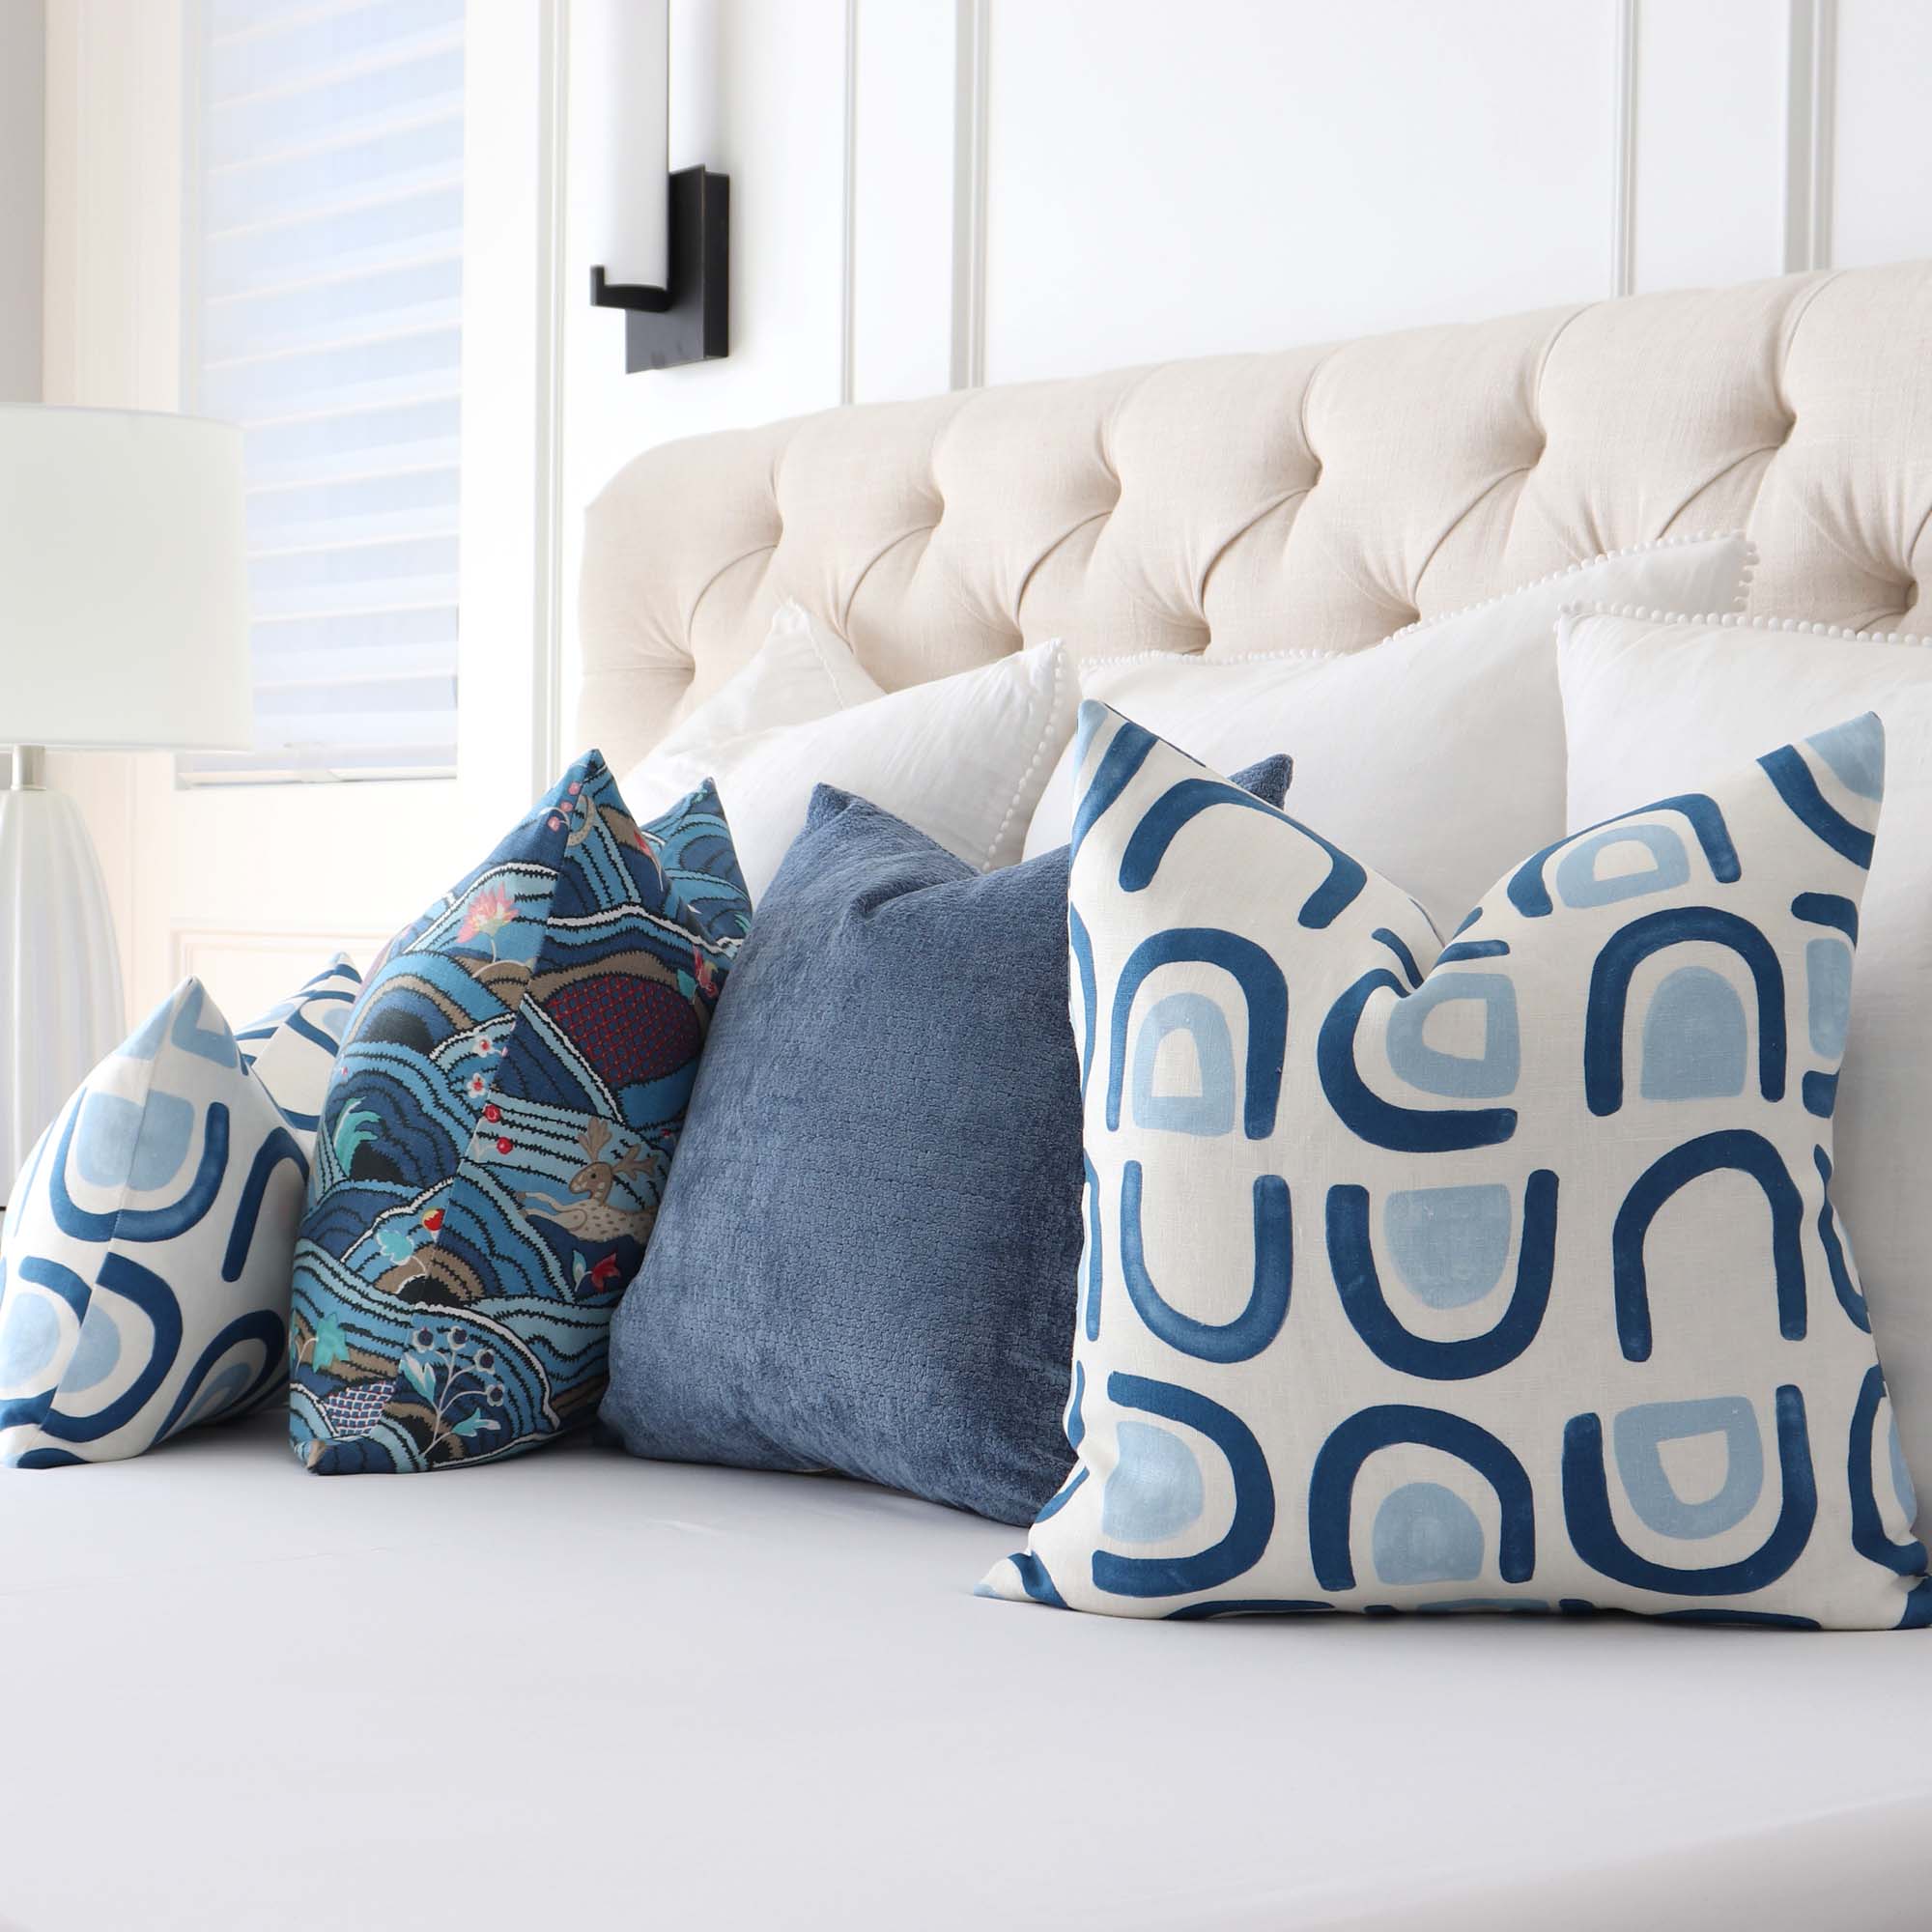 Schumacher Hidaya Williams Threshold Lapis Blue Graphic Print Designer Linen Decorative Throw Pillow Cover with Matching Throw Pillows